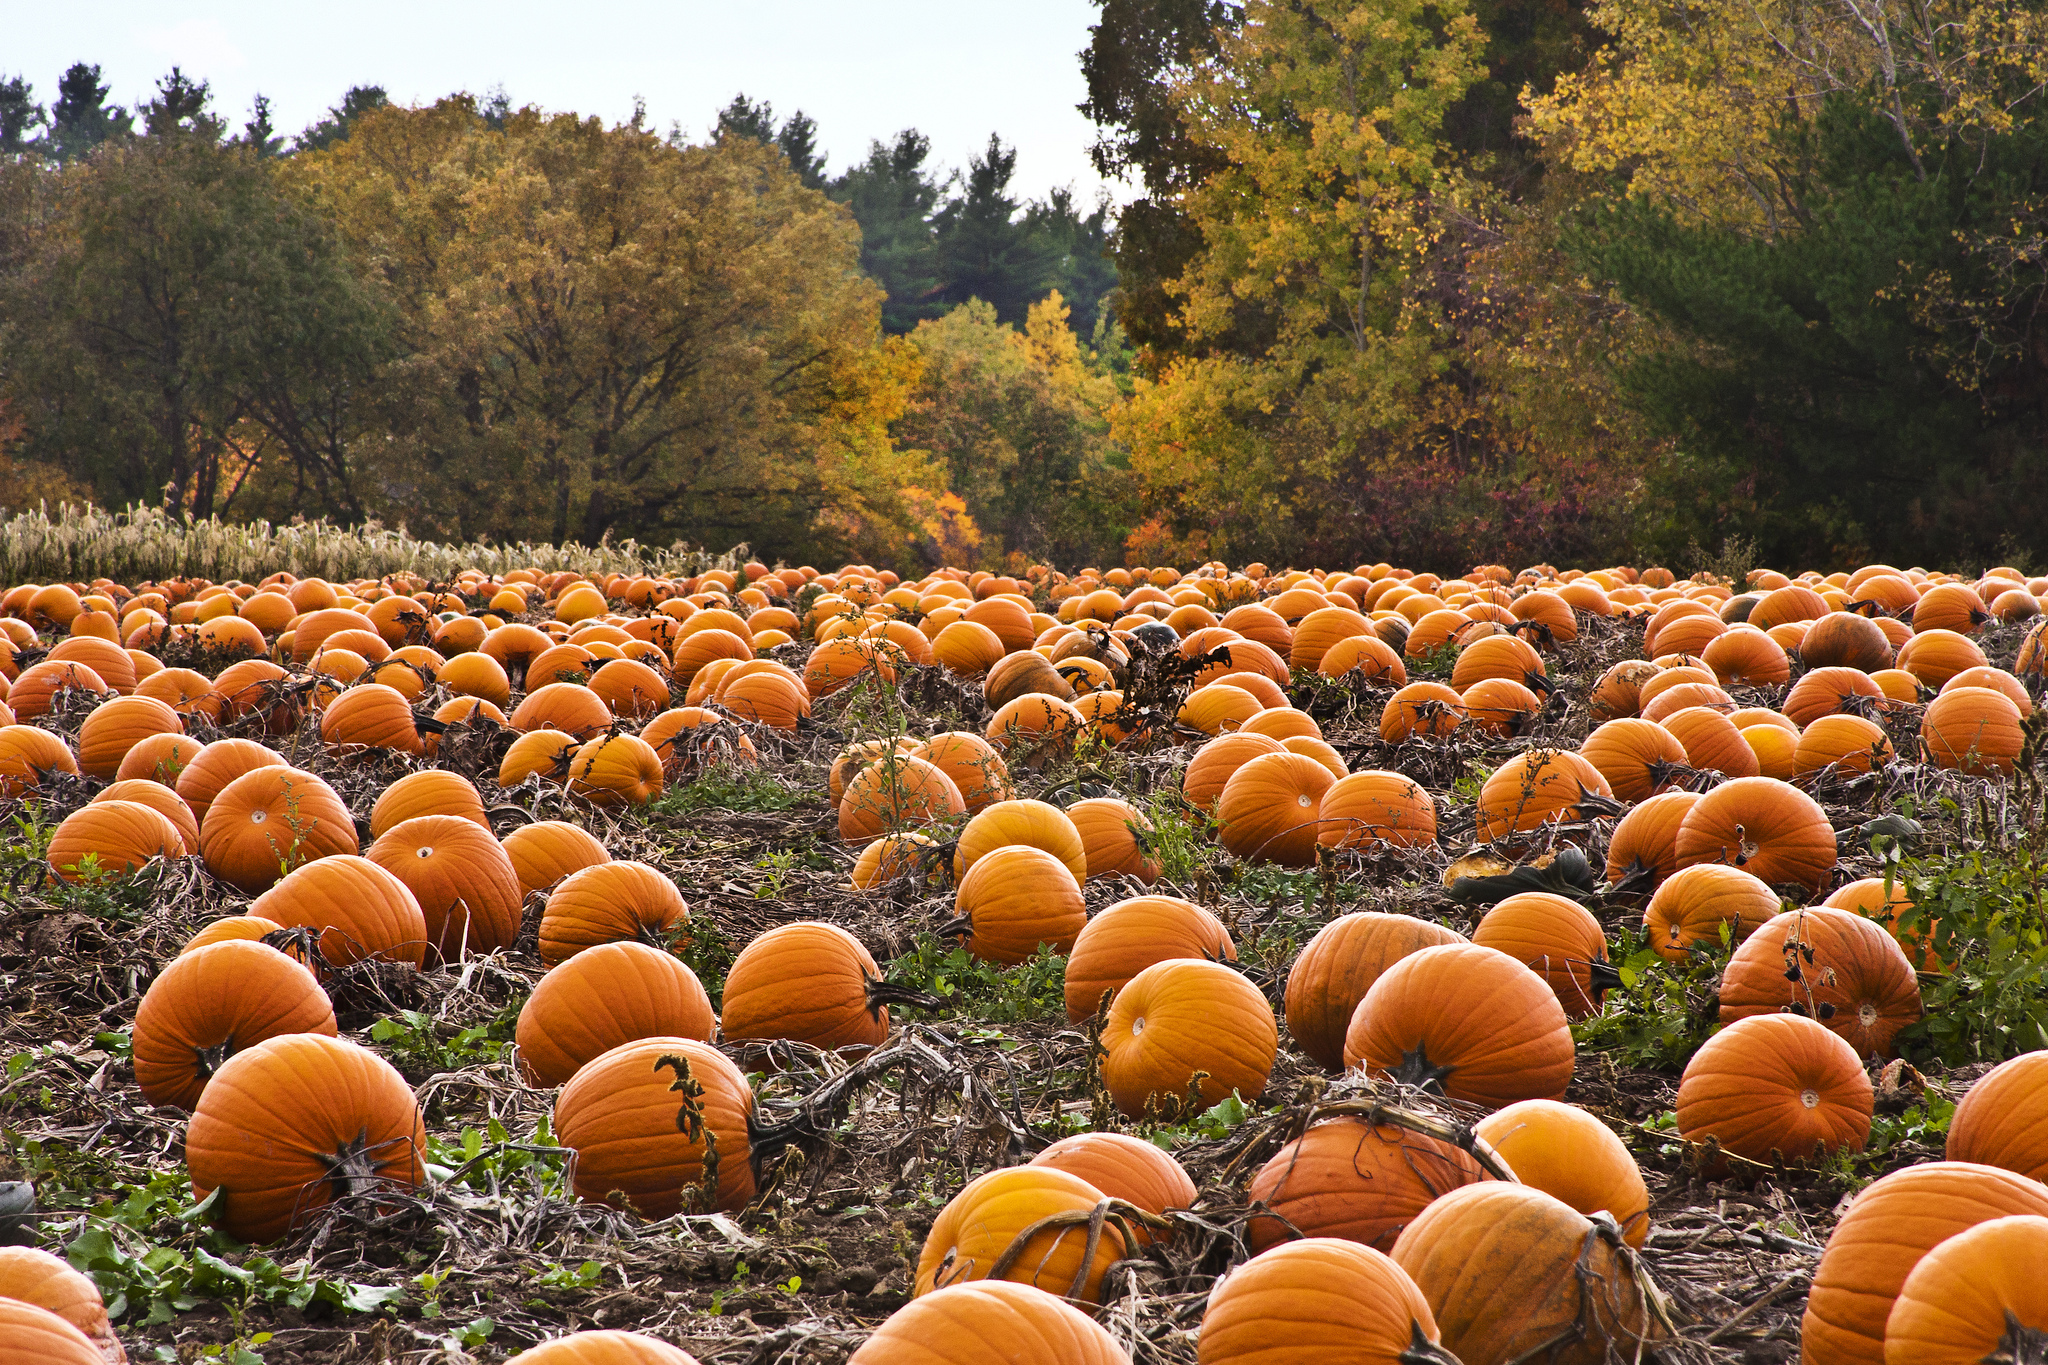 Lawrence pumpkin patch